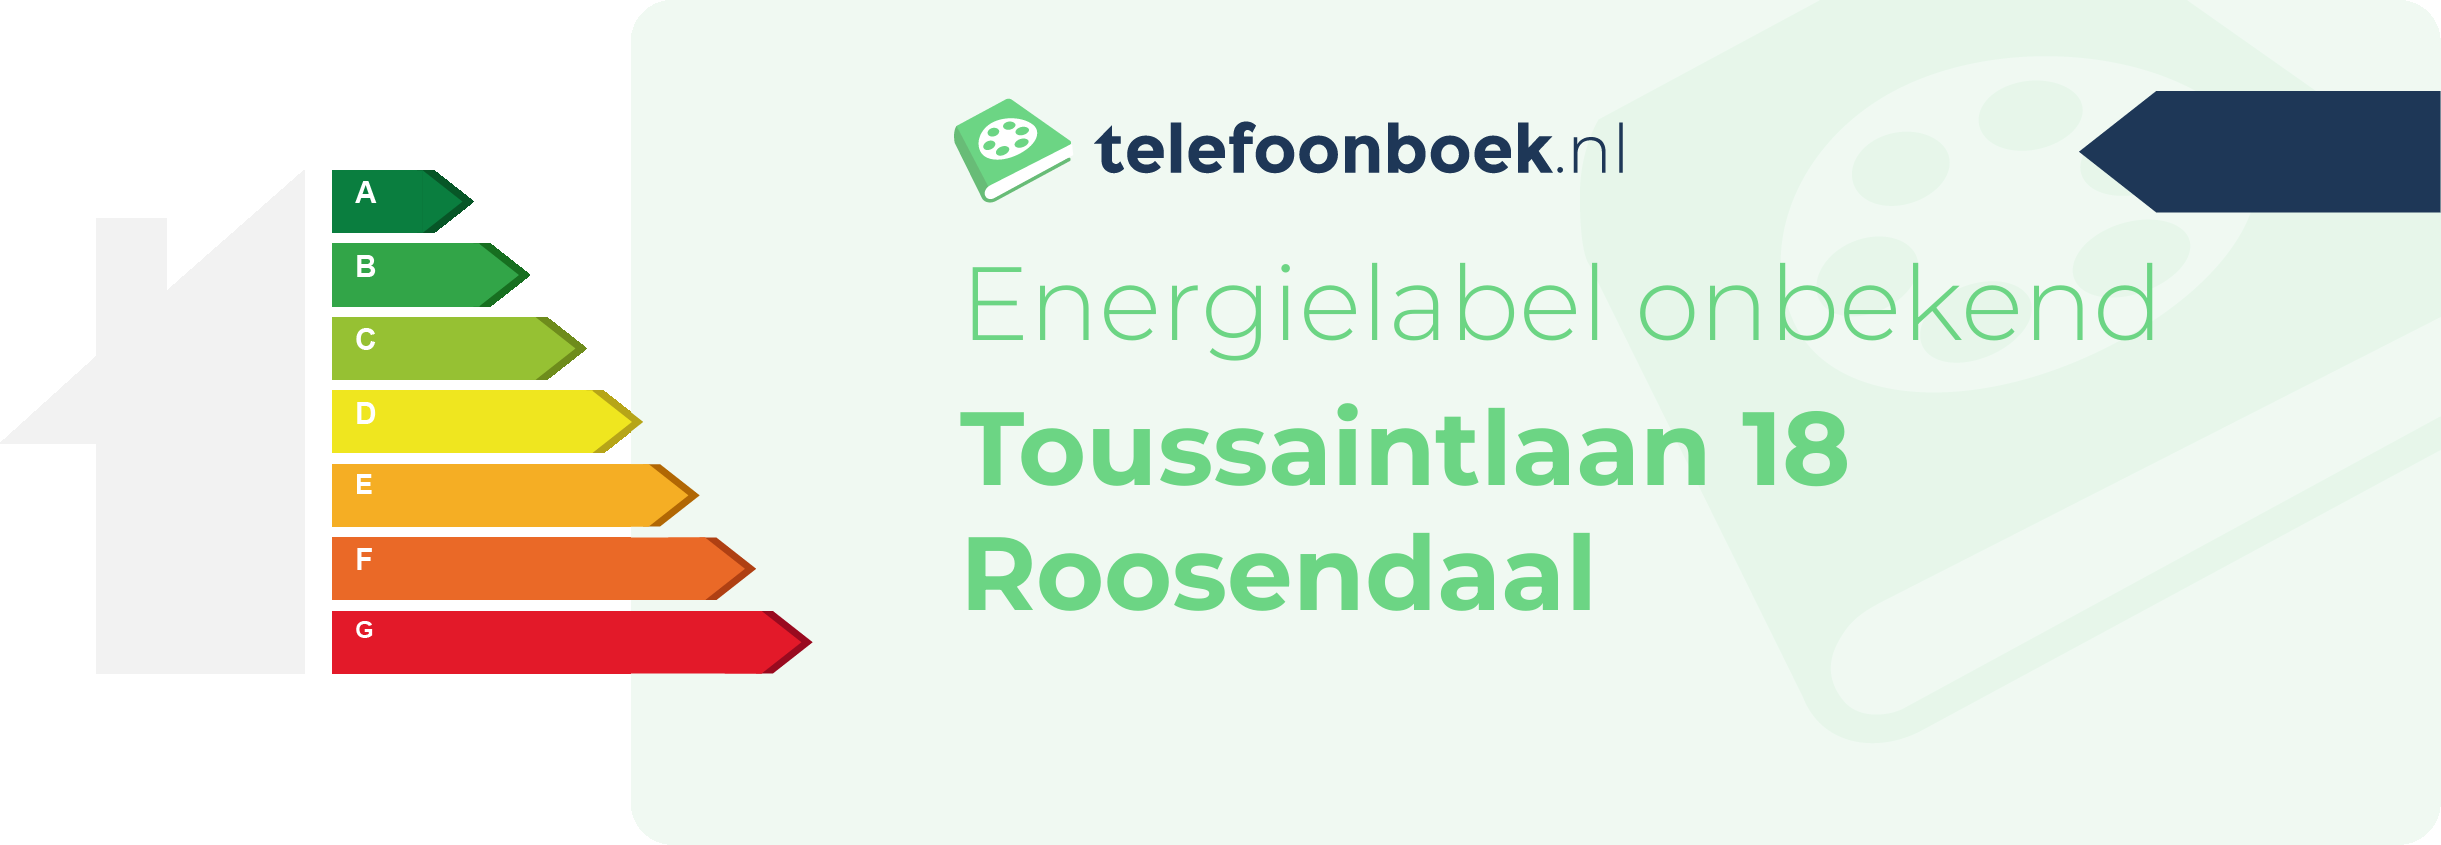 Energielabel Toussaintlaan 18 Roosendaal